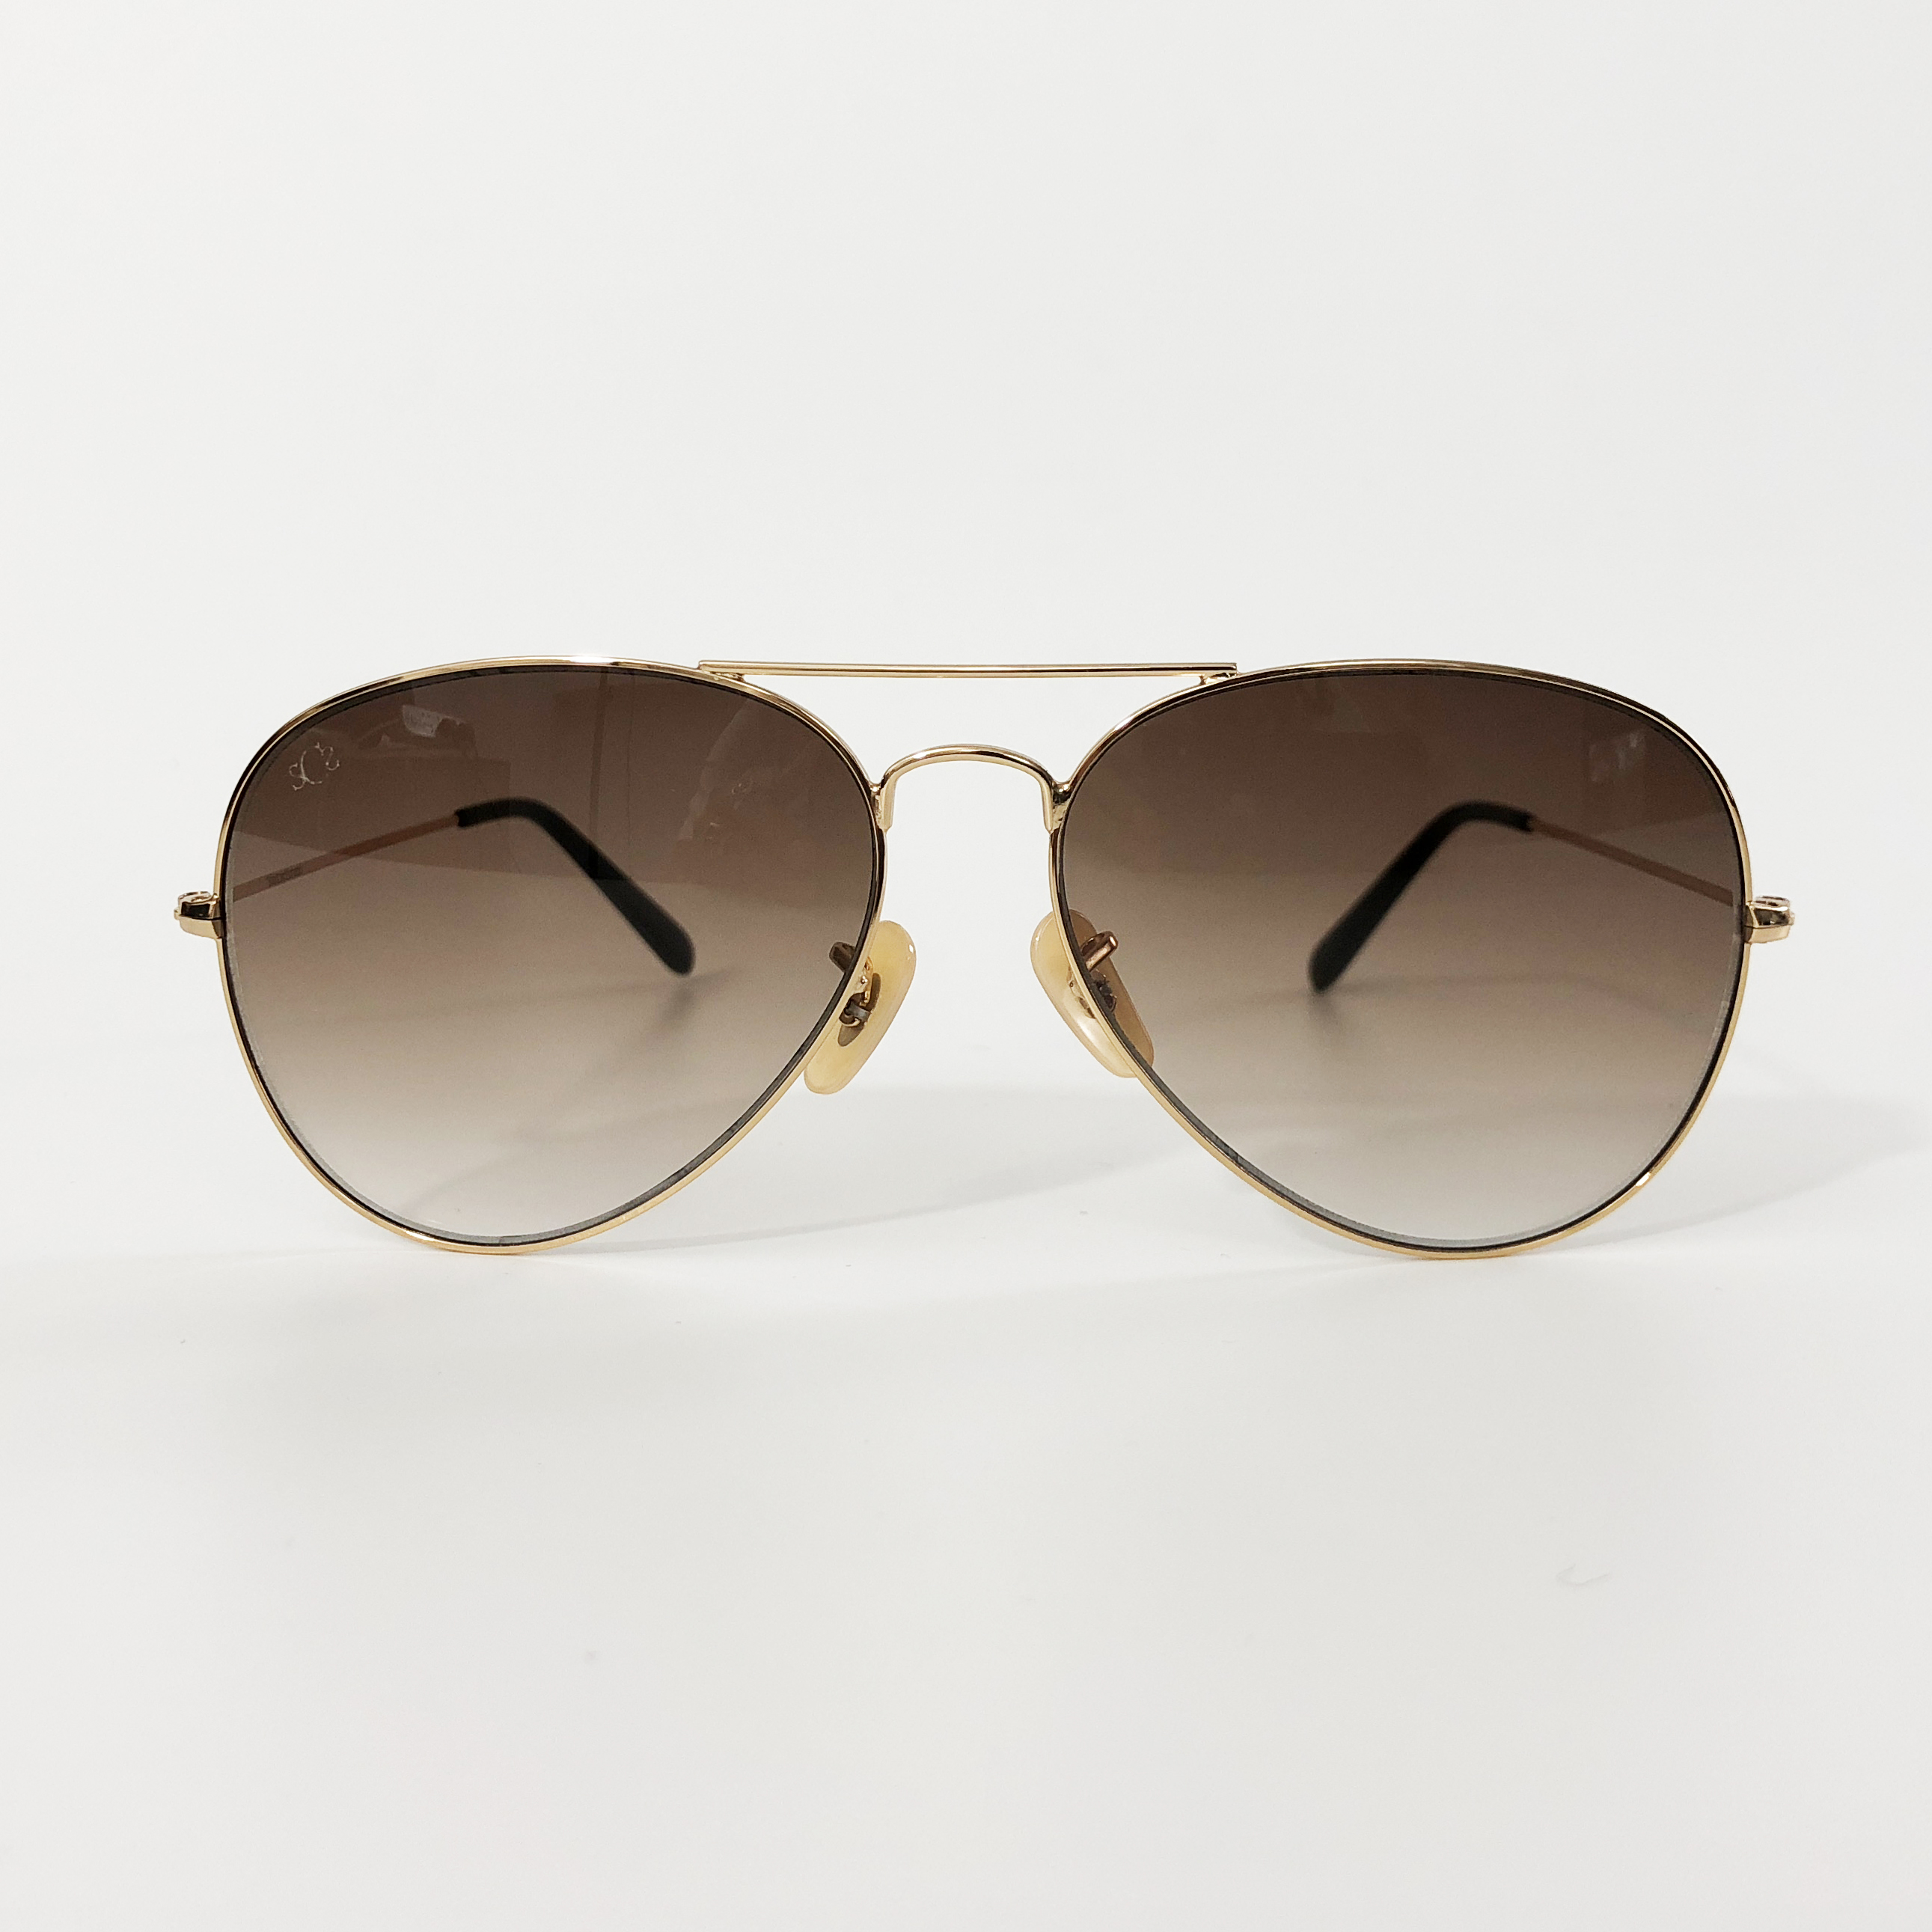 Polarized vs. Non-Polarized Sunglasses | Warby Parker